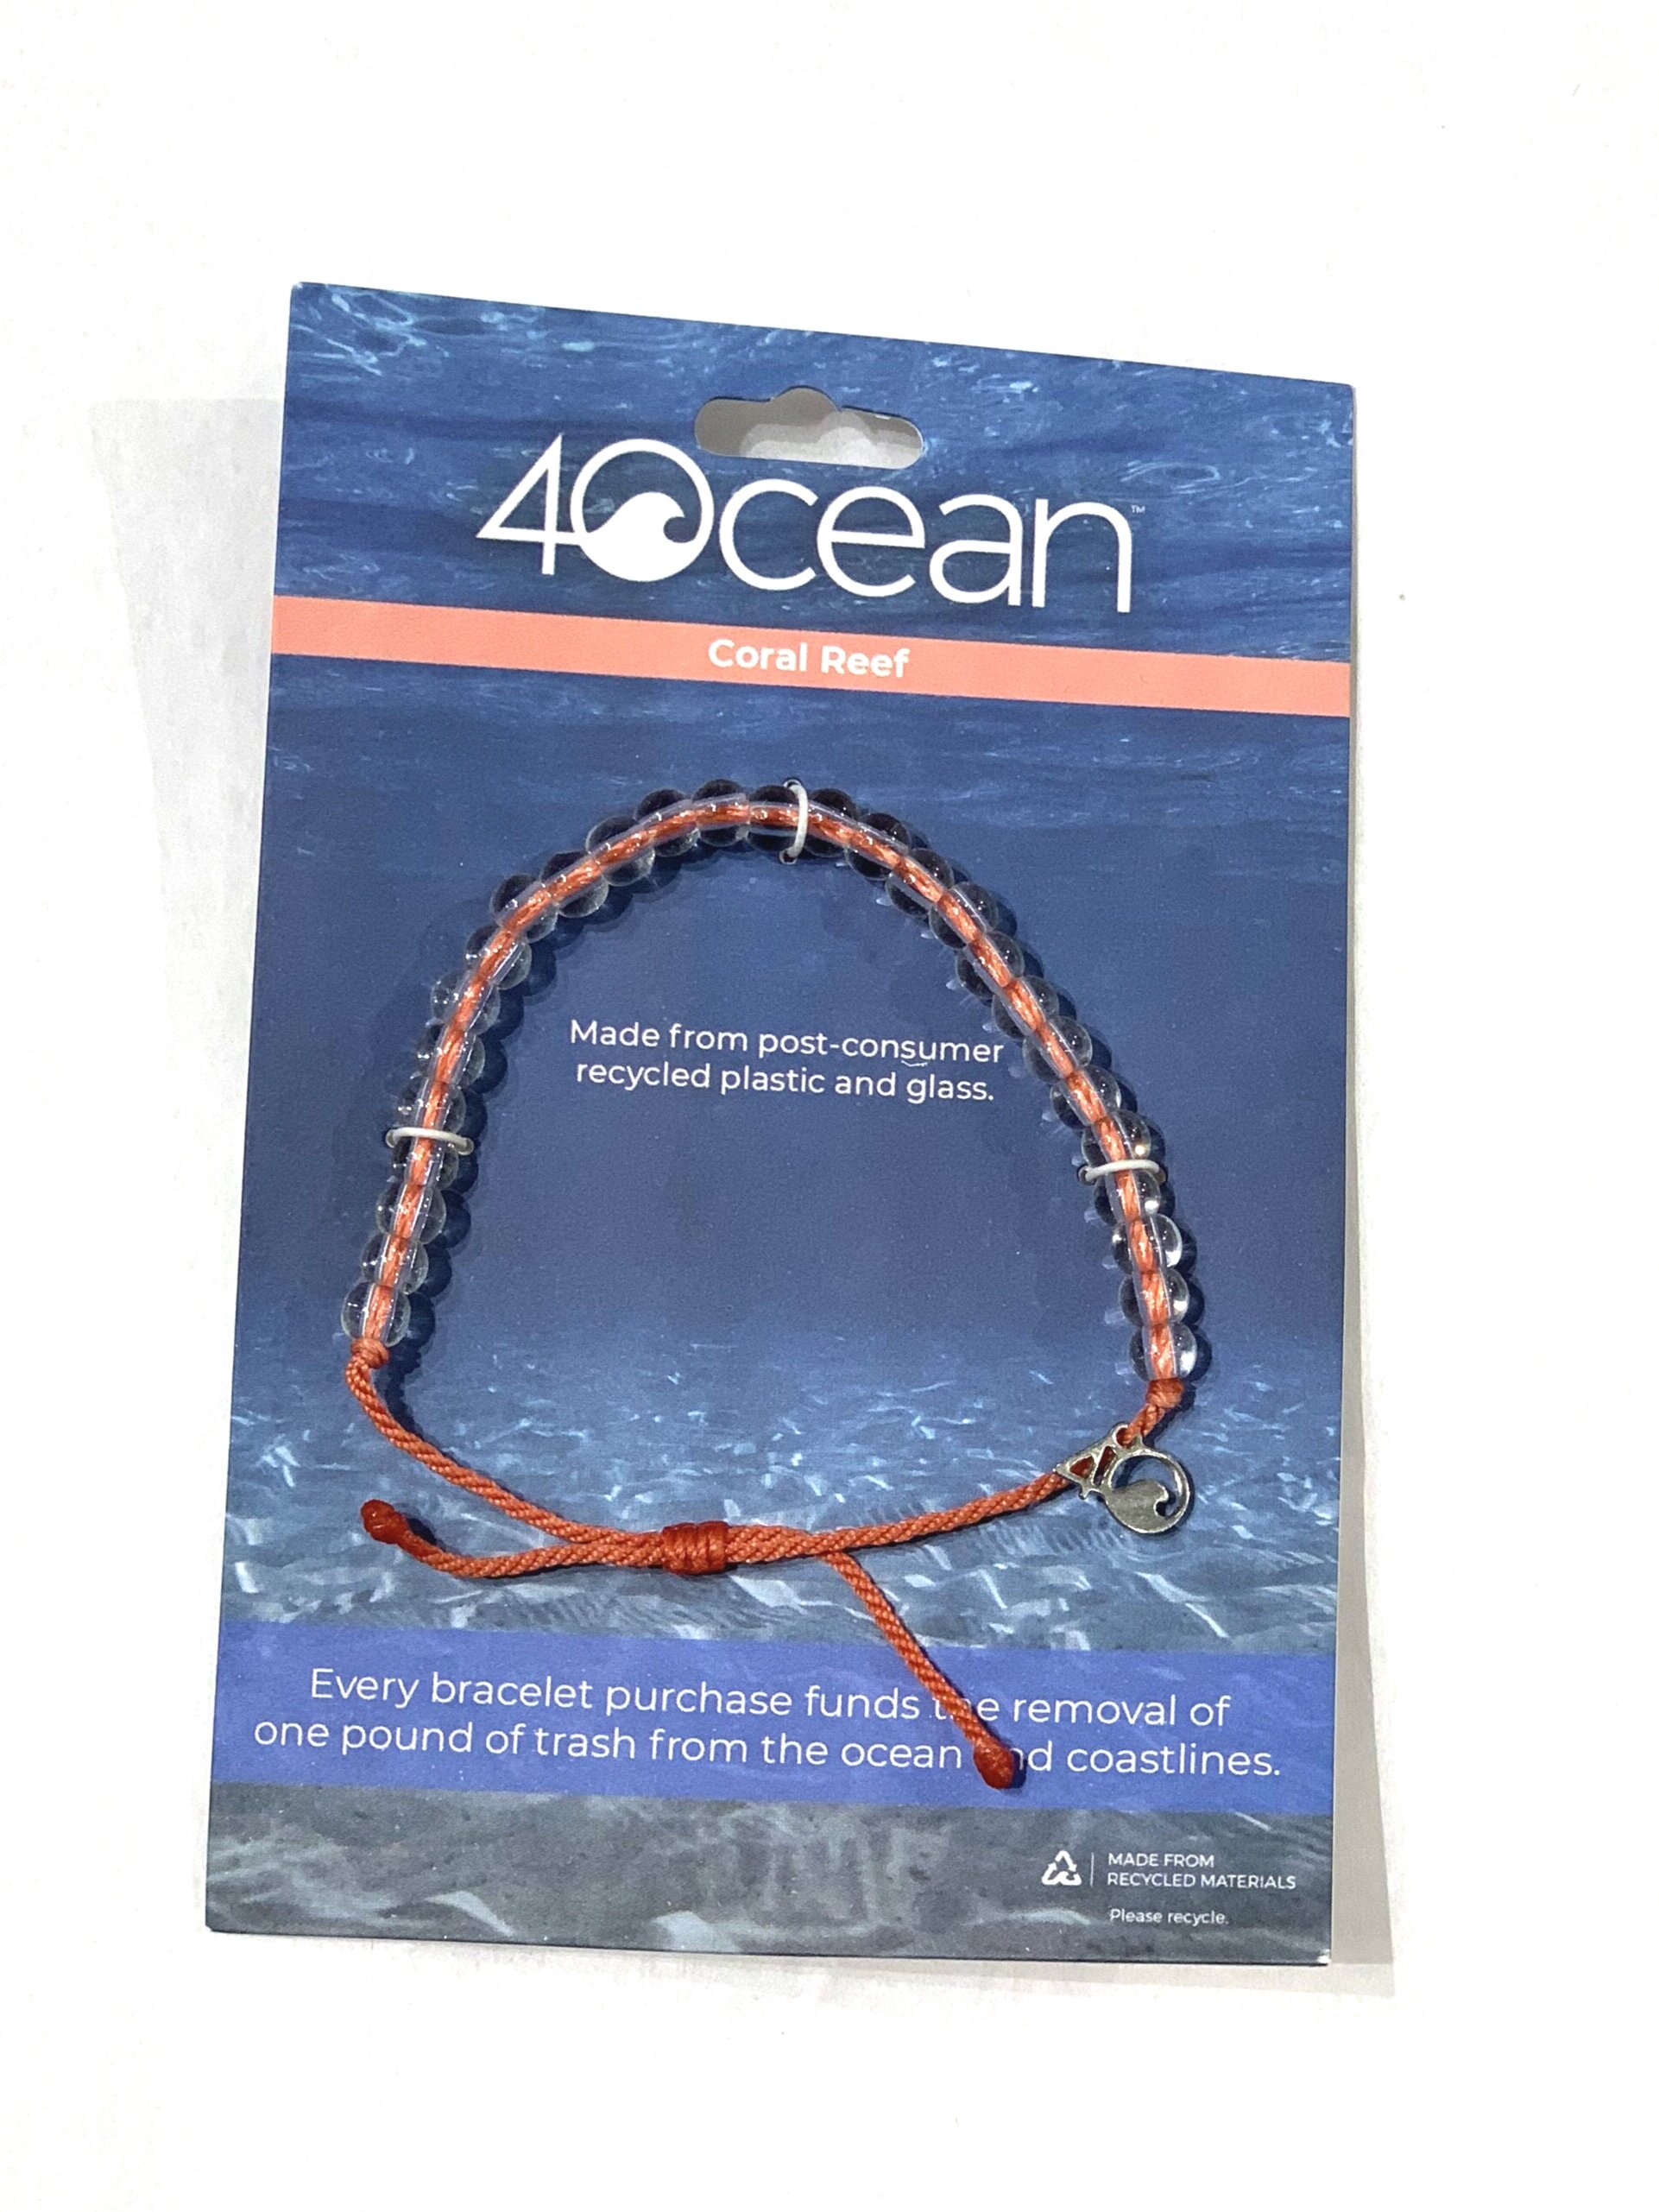 4ocean - NEW: Whale Shark Bracelets! We're introducing... | Facebook